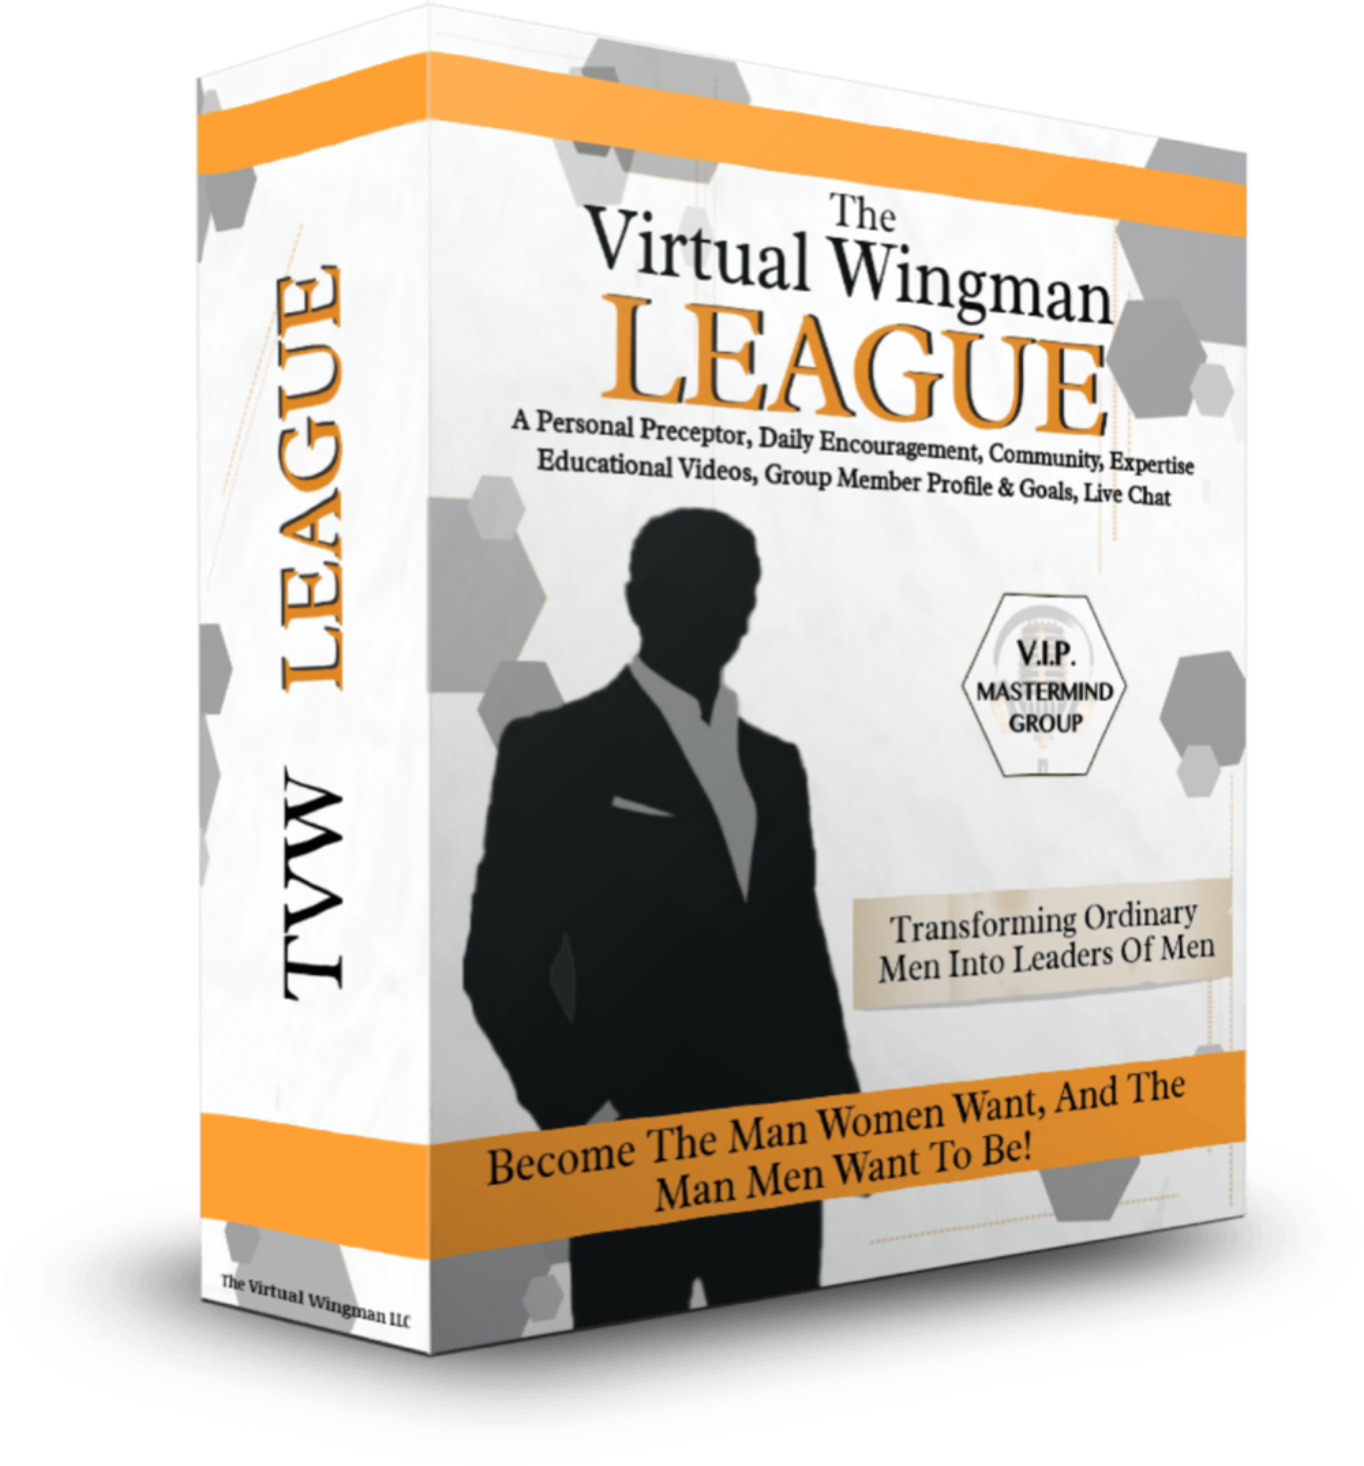 The Virtual Wingman League